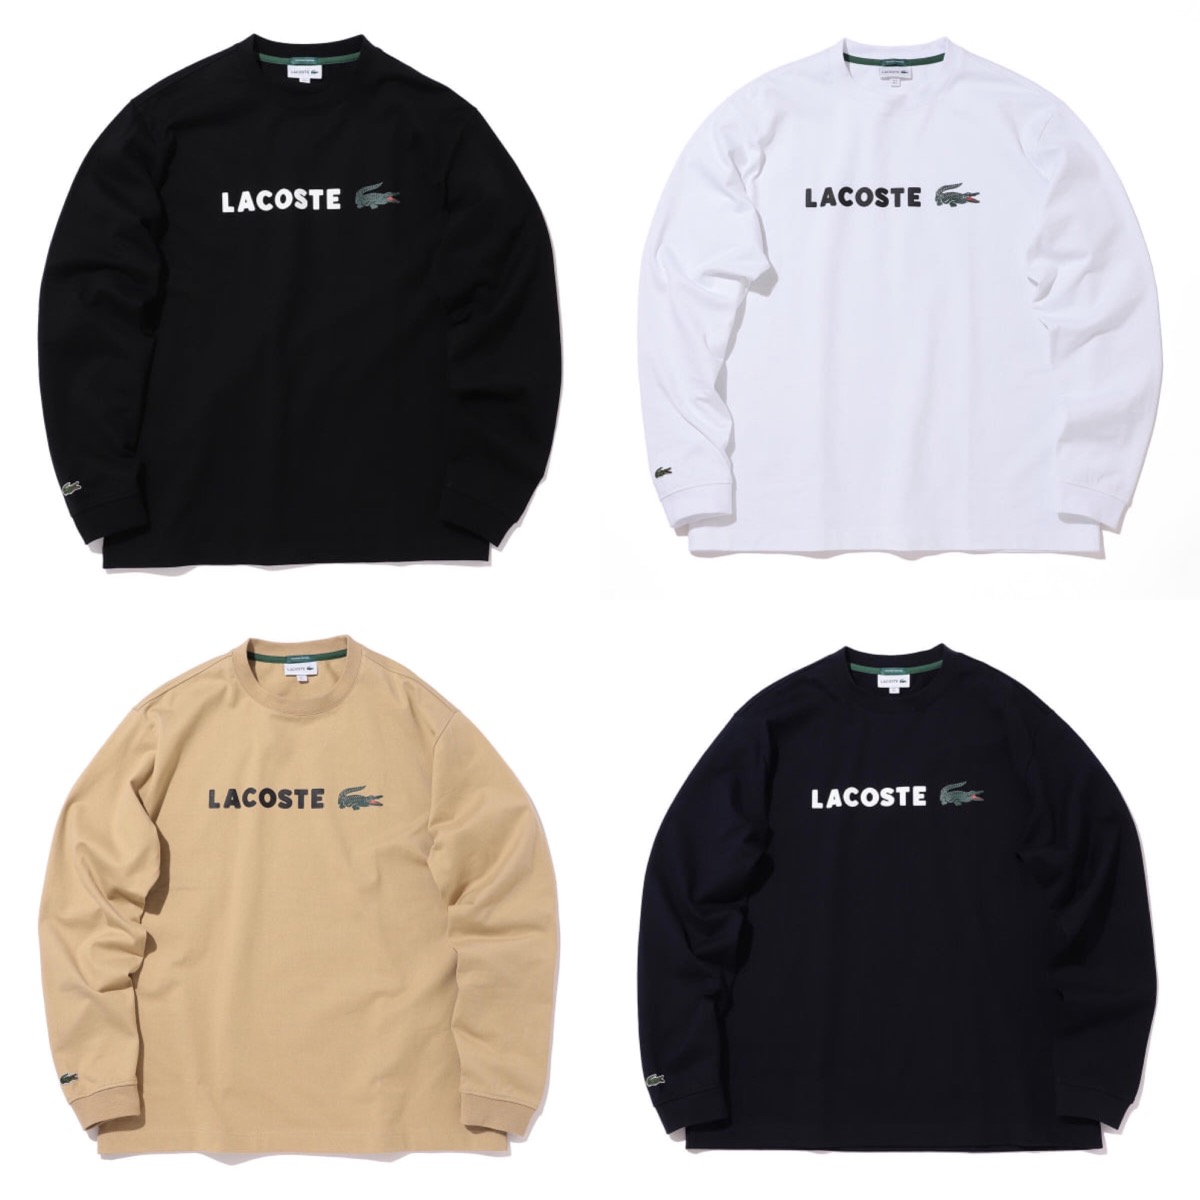 LACOSTE × BEAMS 別注ロングスリーブTシャツ全4色の先行予約が開始